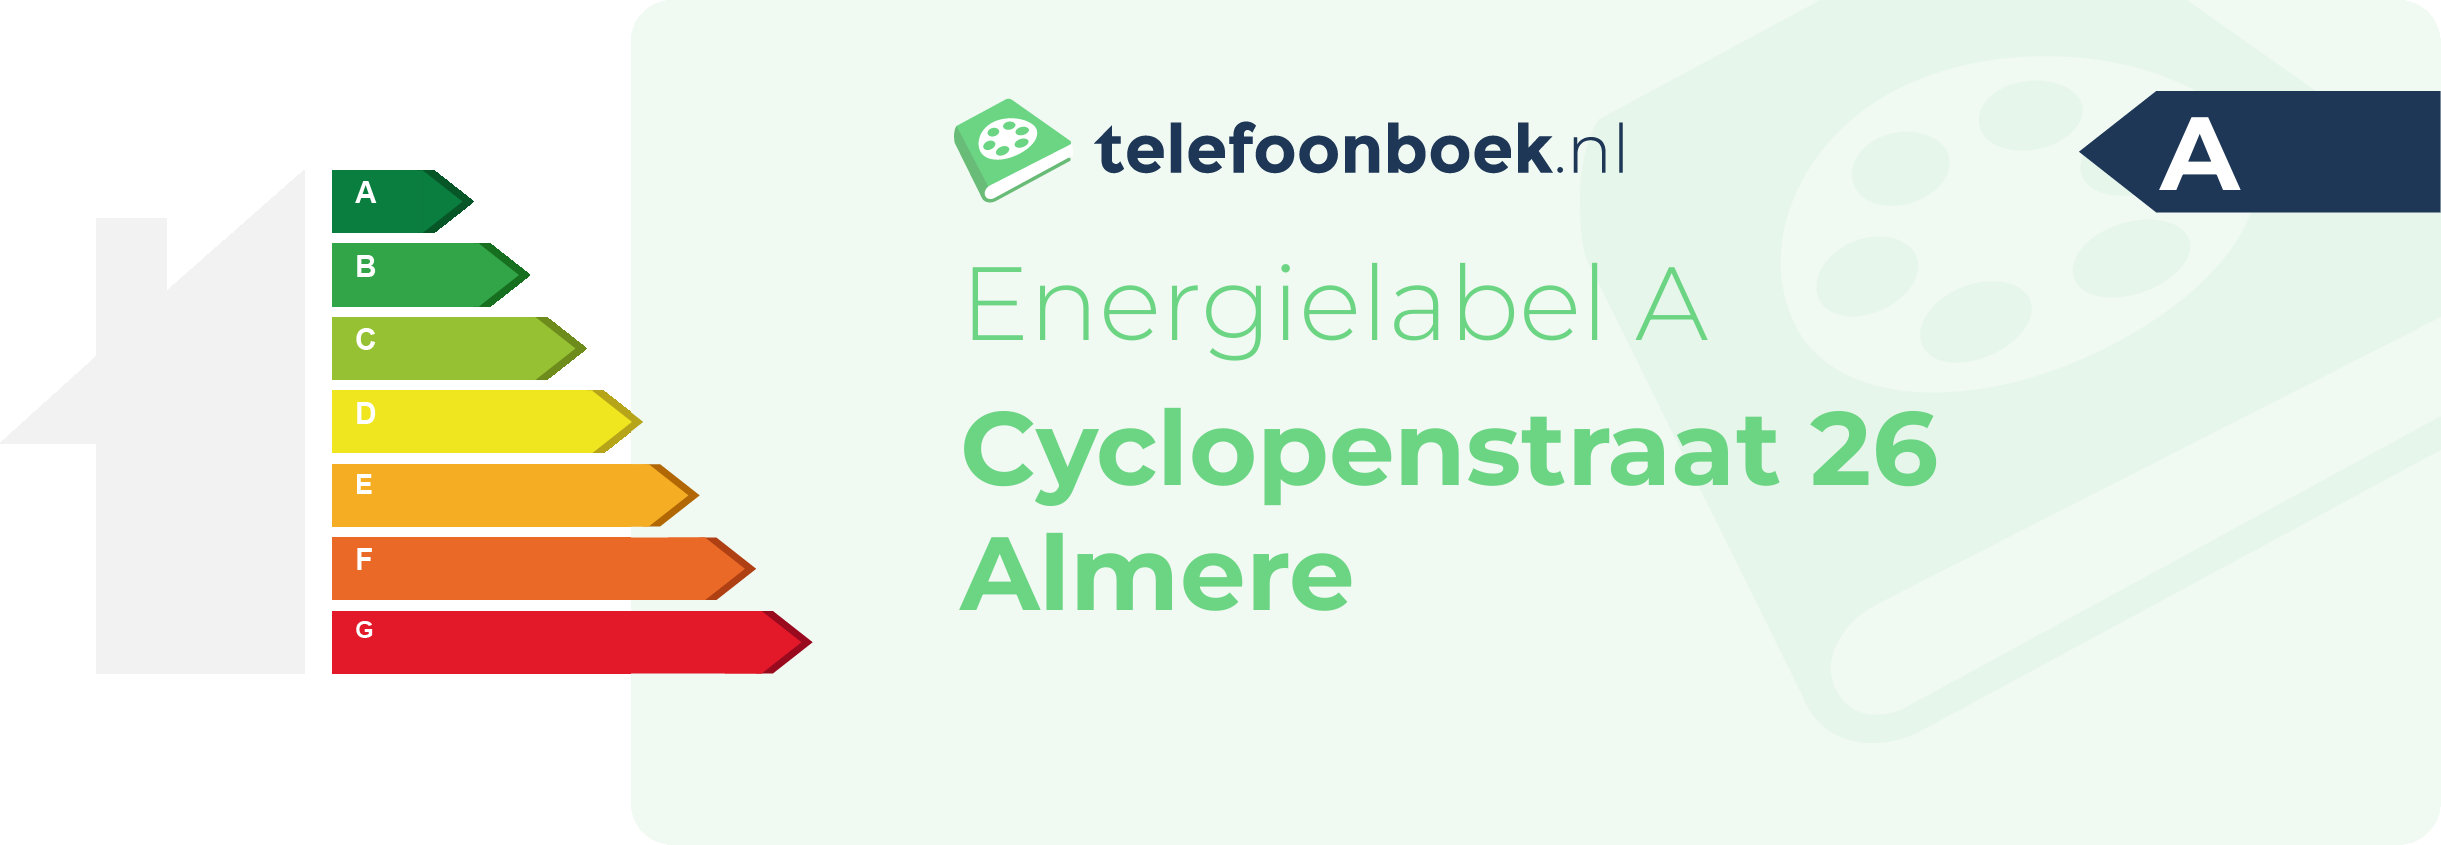 Energielabel Cyclopenstraat 26 Almere